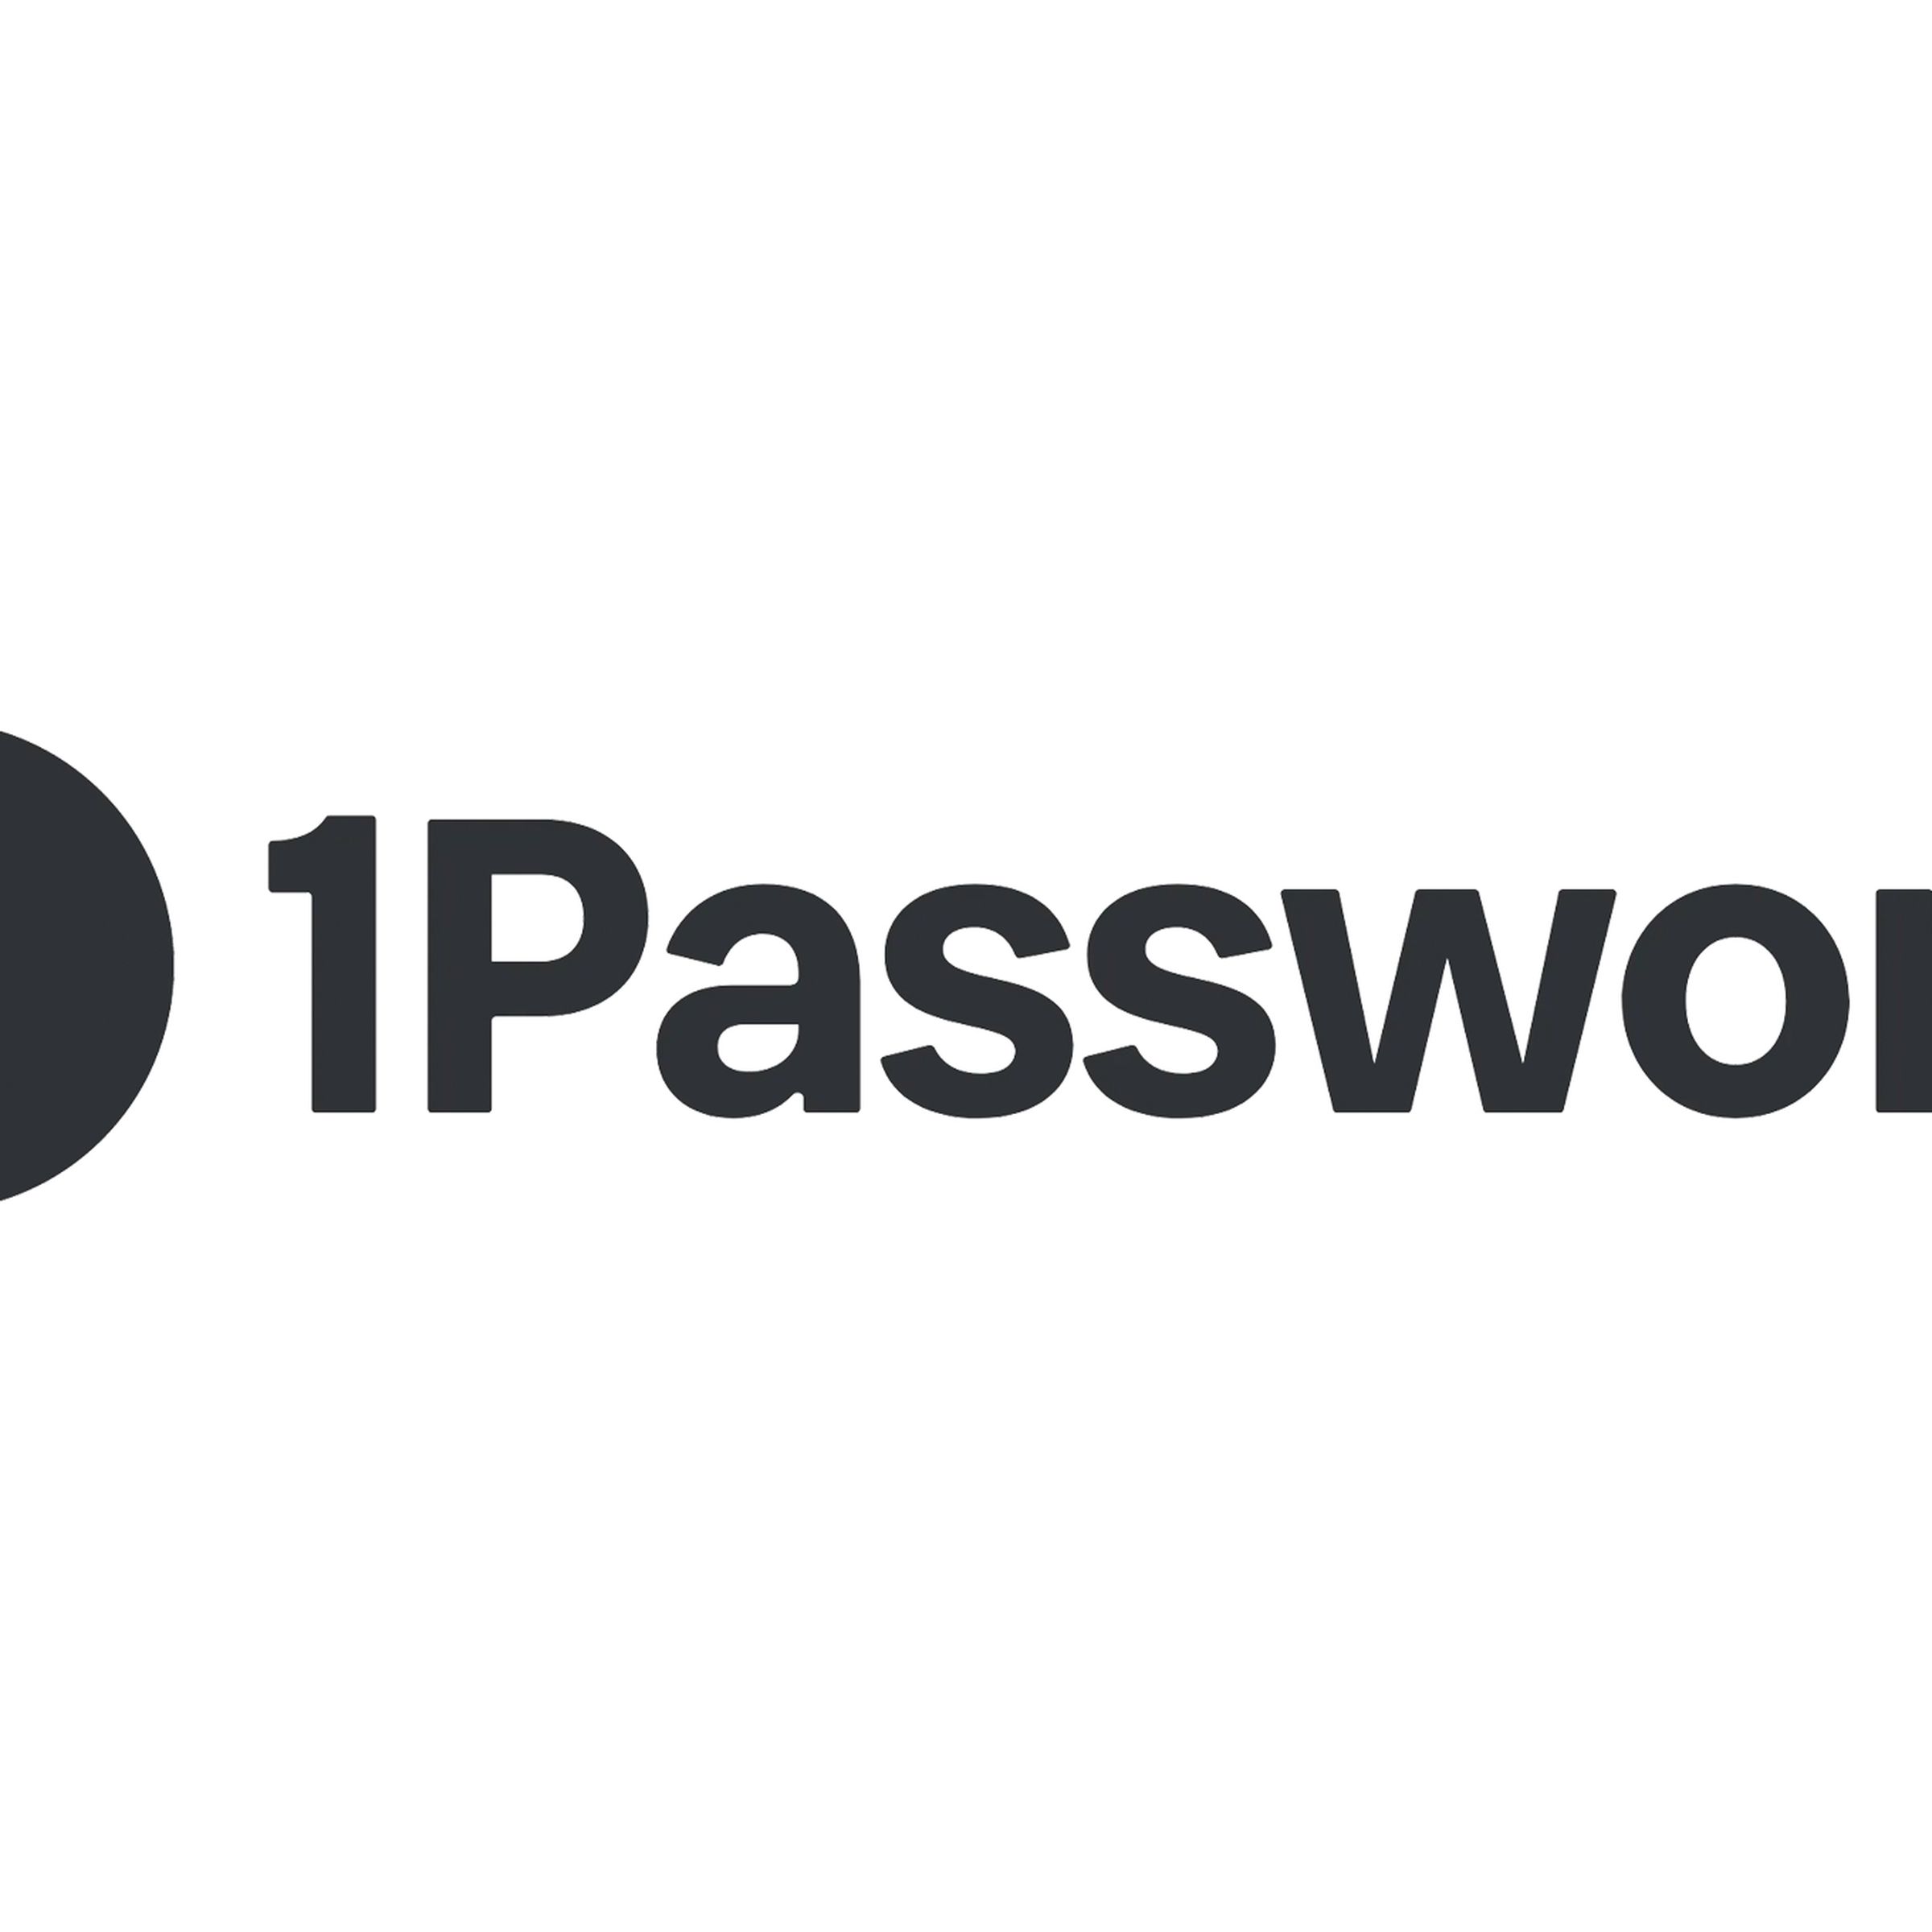 The 1Password logo on a white background.